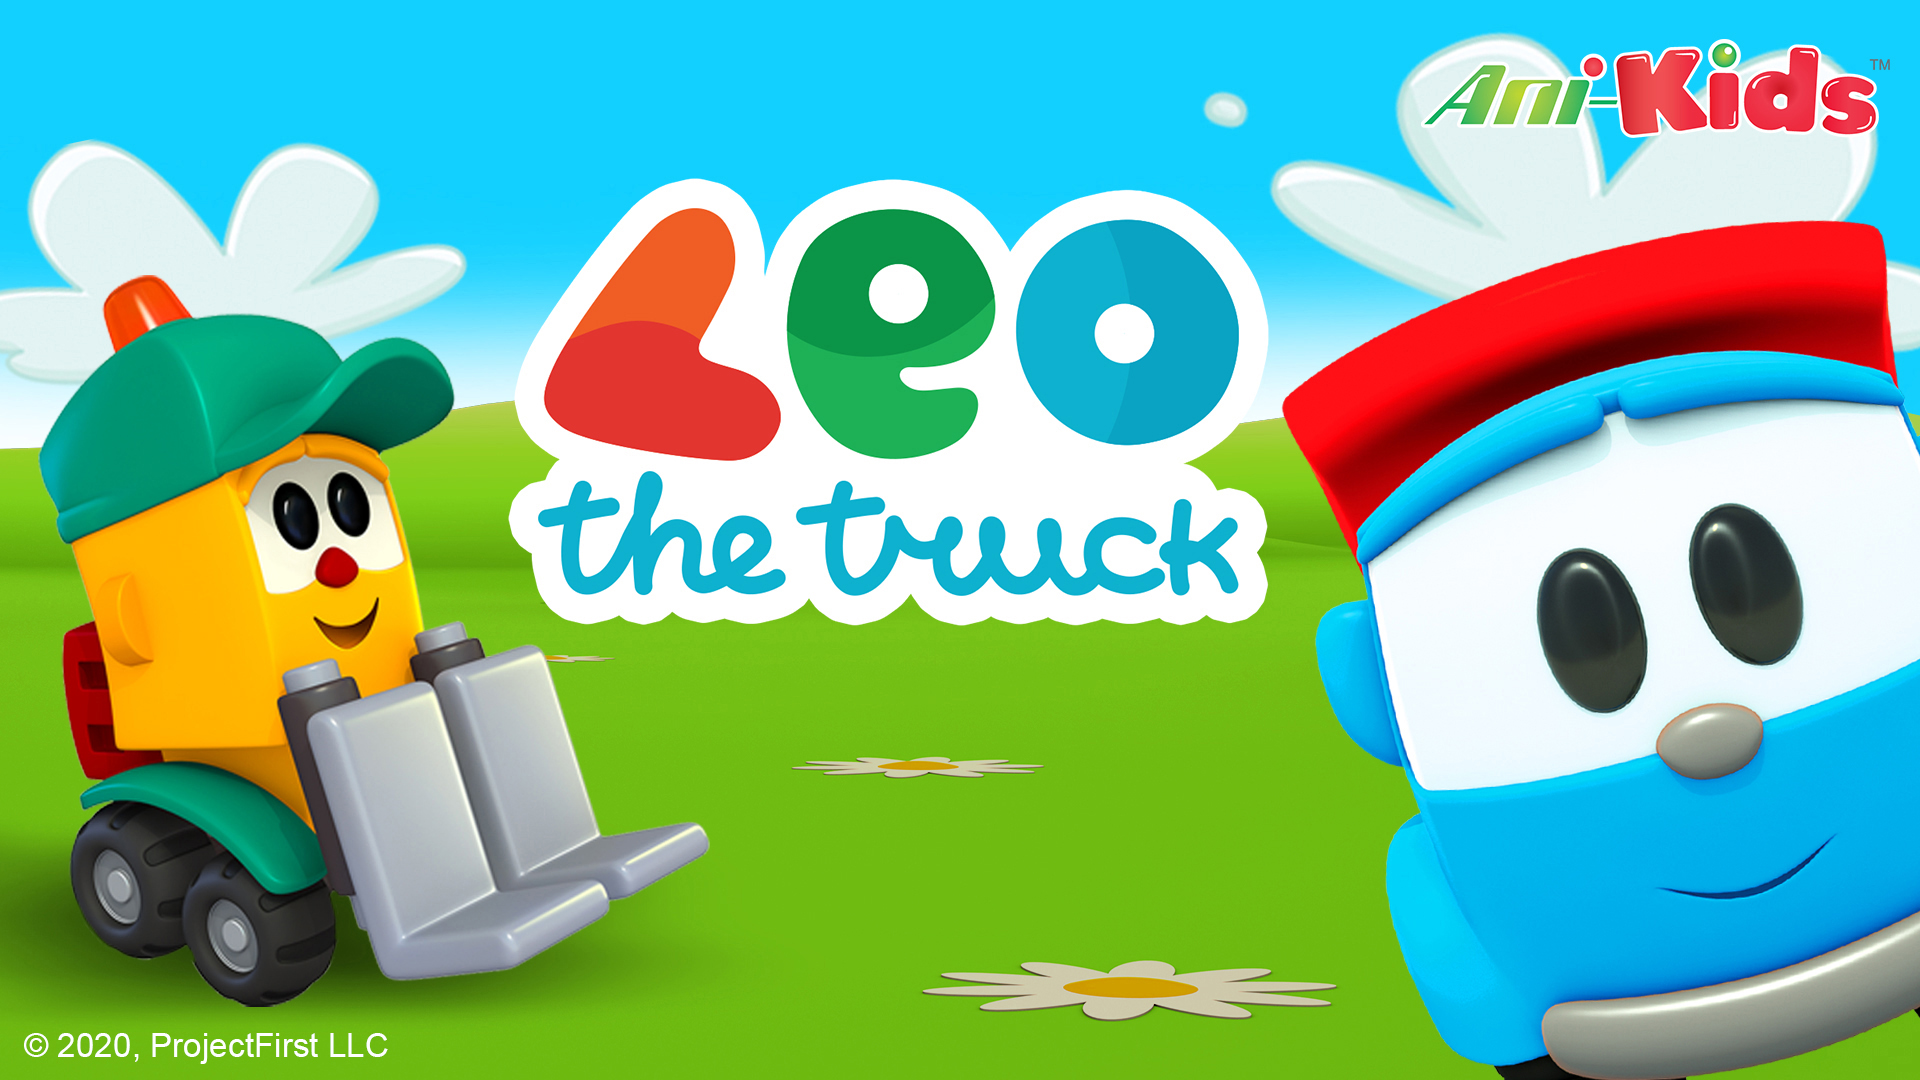 Leo the truck cartoon. A new house for Lea the truck. Car cartoons for  kids. 